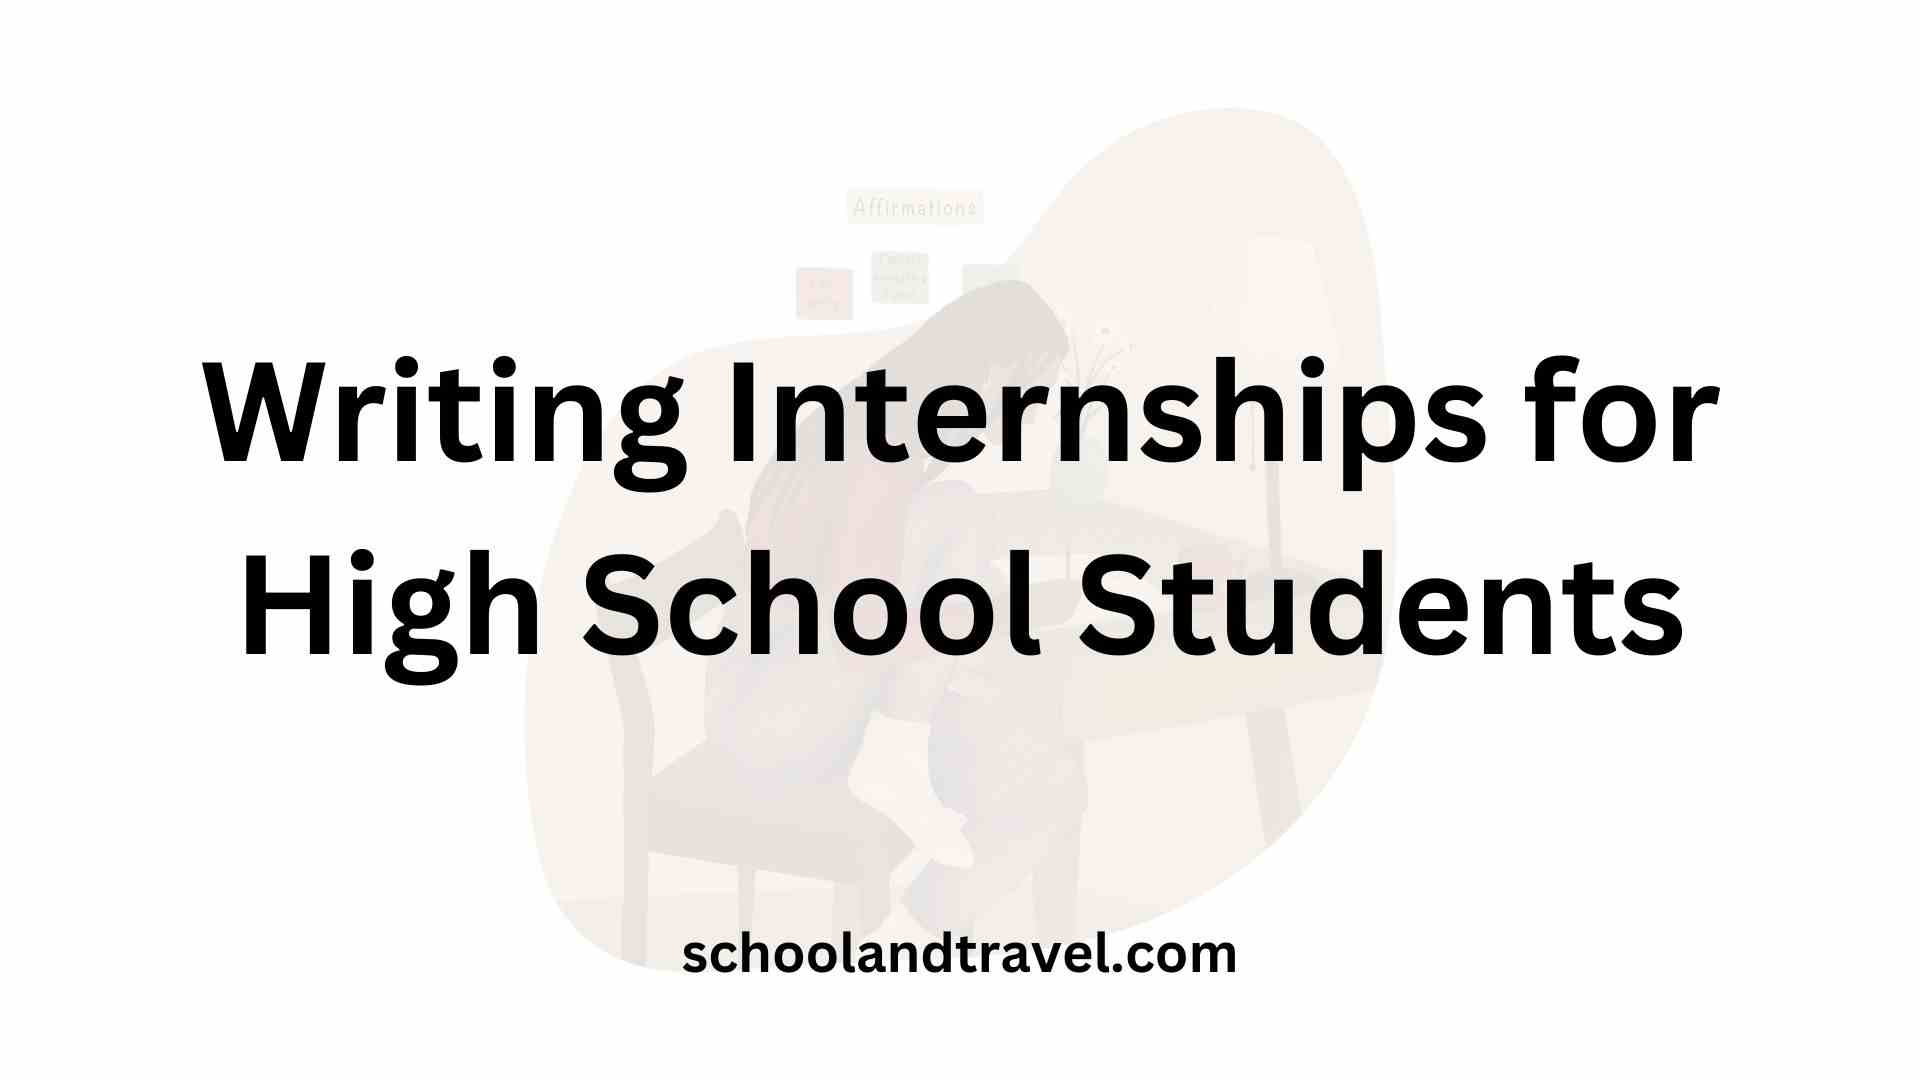 Writing Internships for High School Students